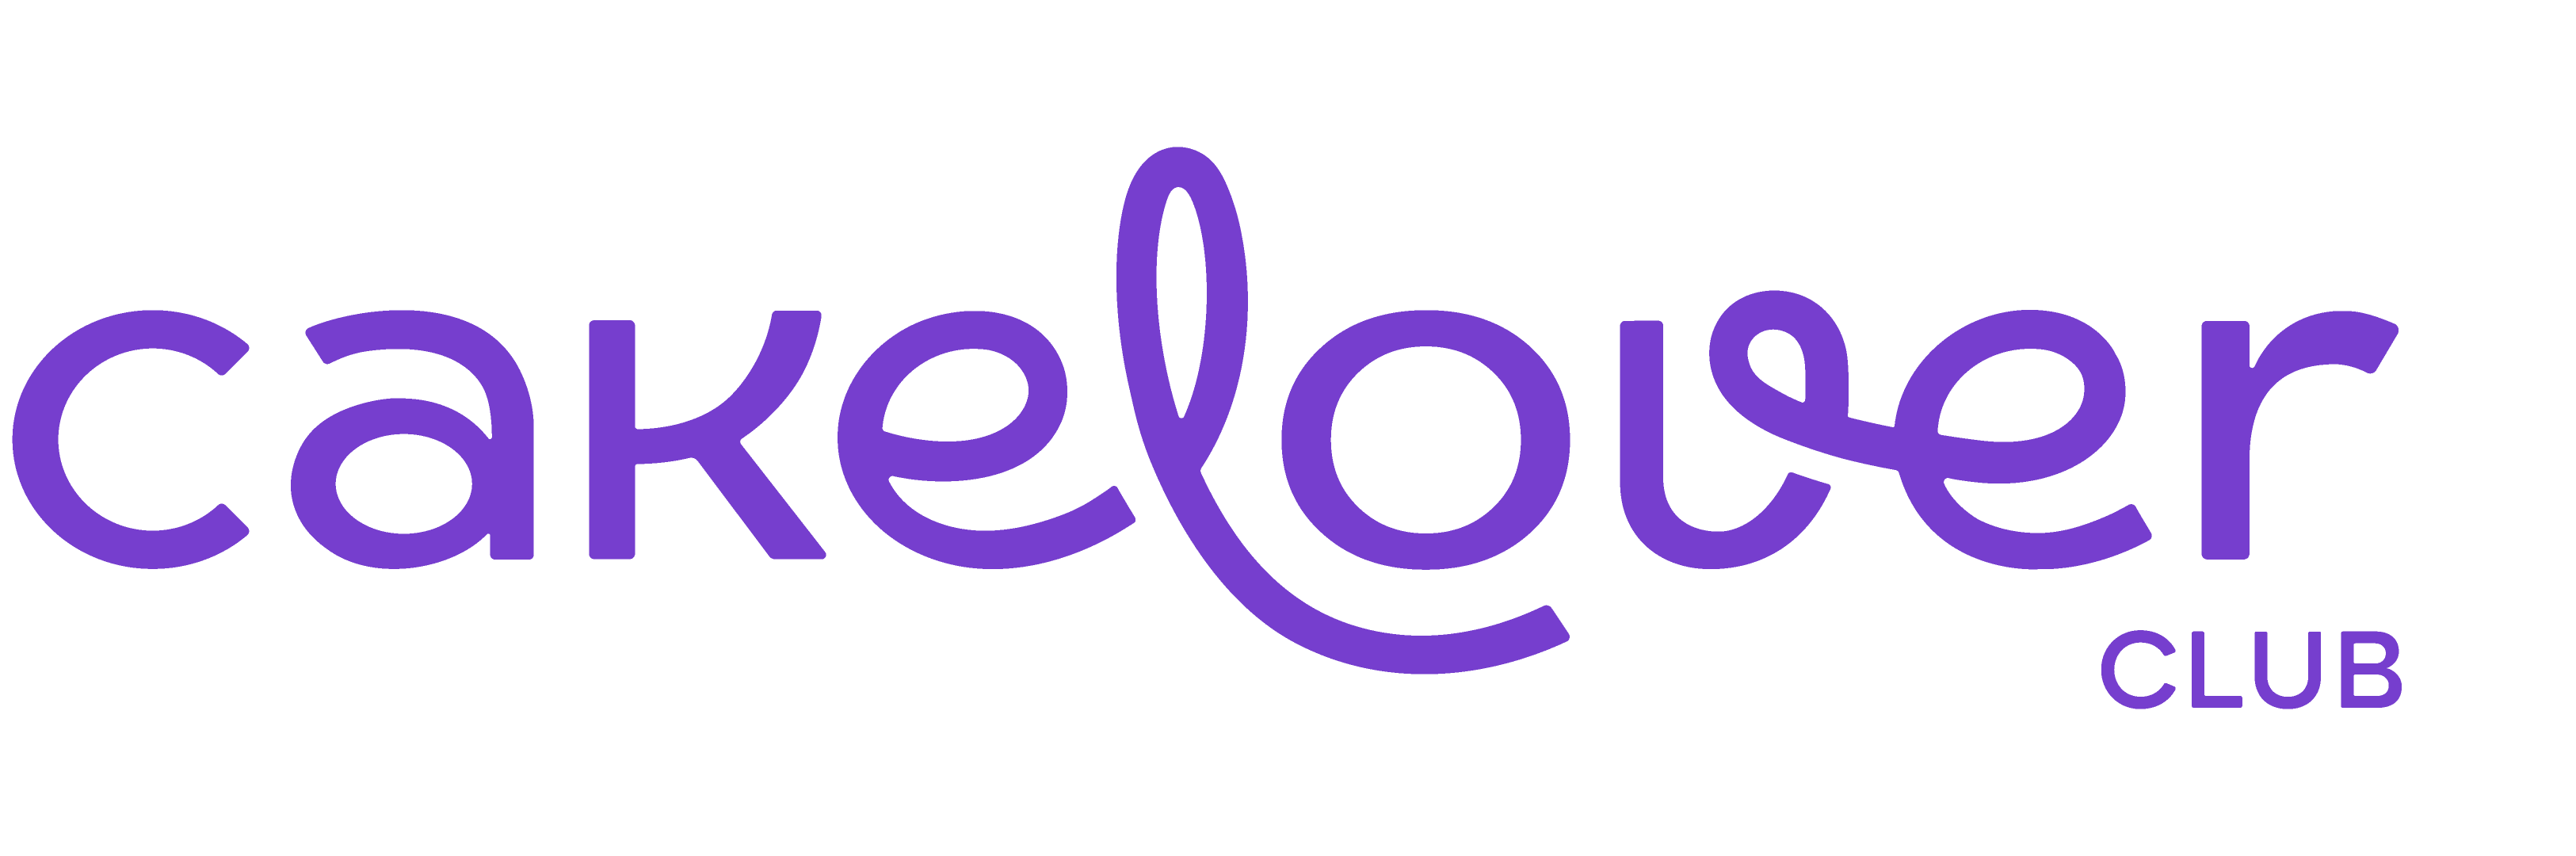 CakeloverClub_Logotipo_1